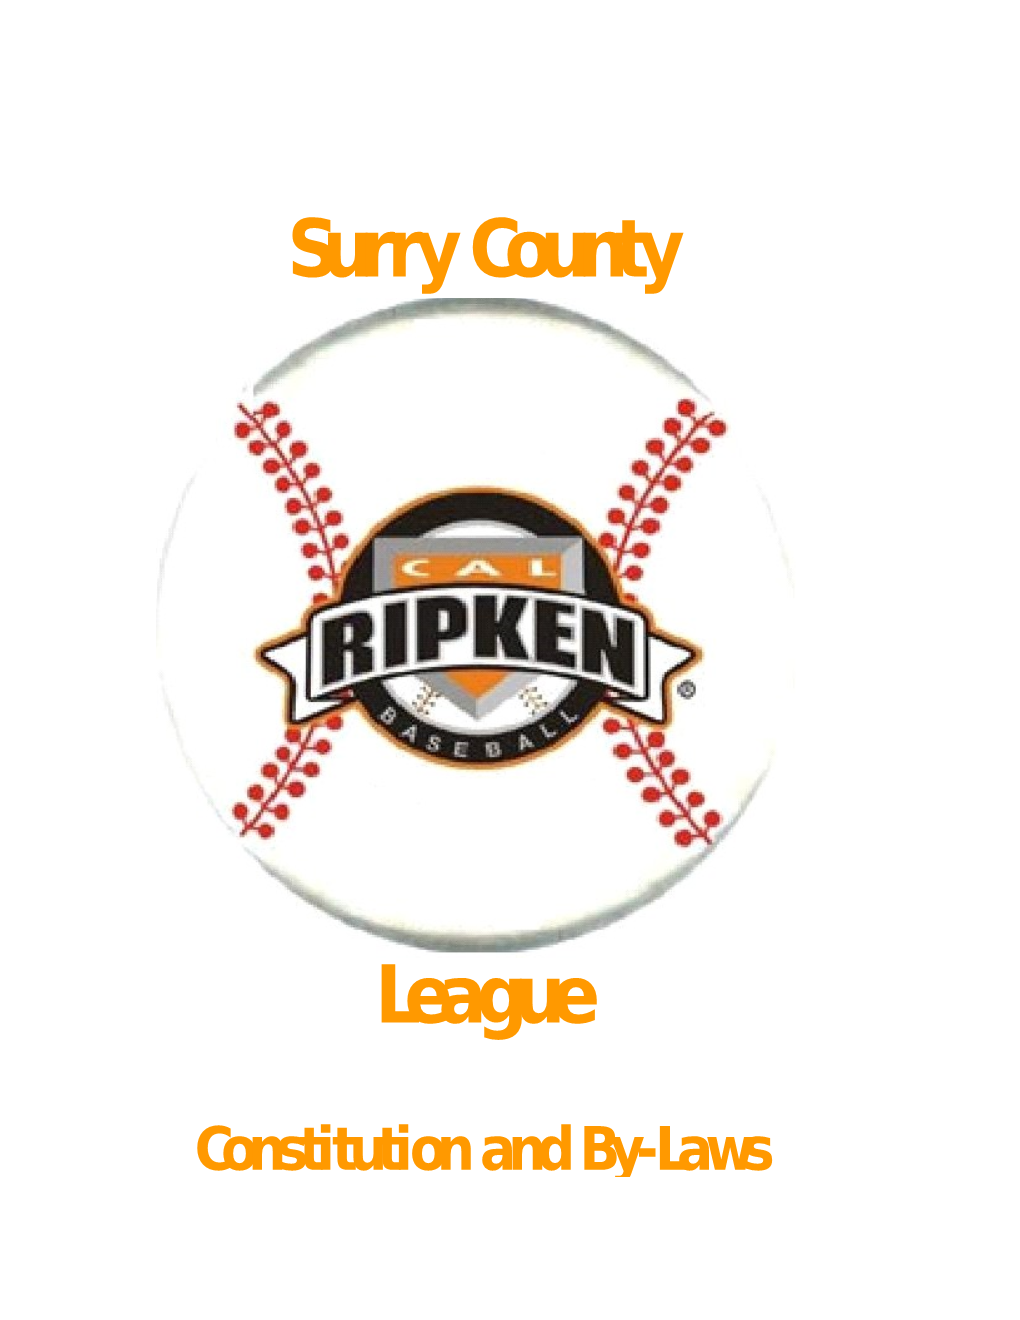 Surry County Cal Ripken League